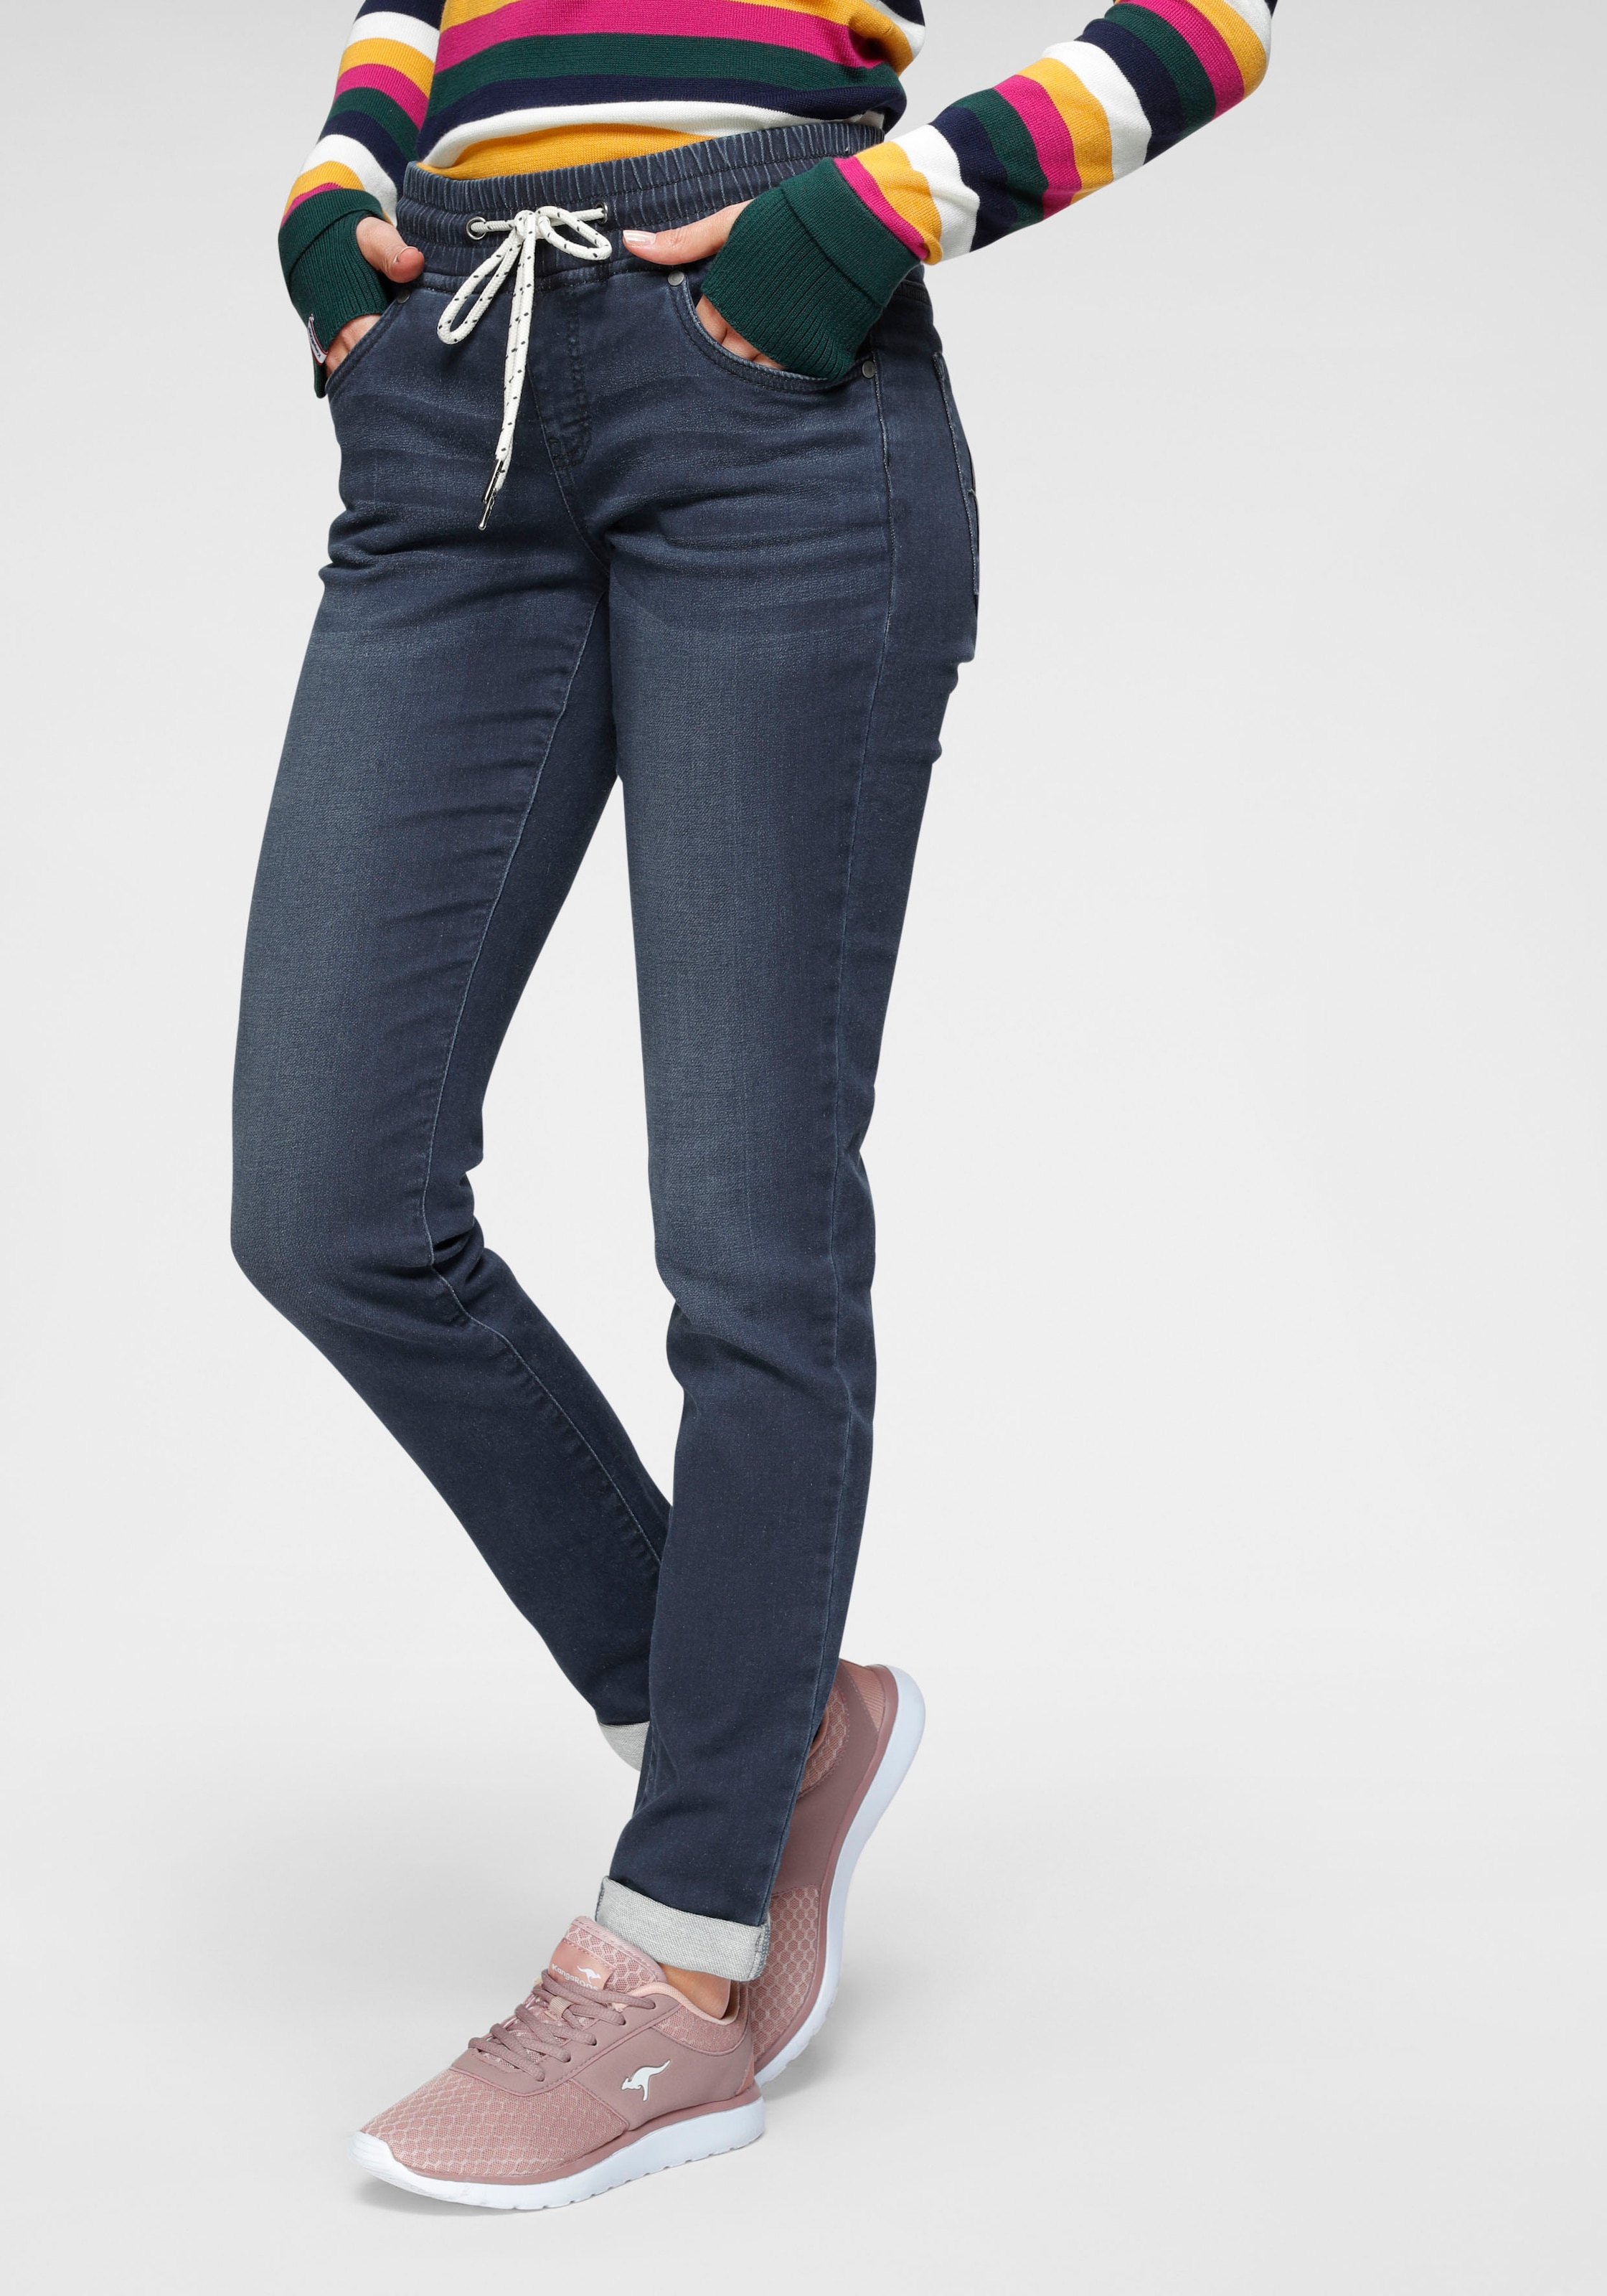 KangaROOS Bequeme bestellen Jeans Online-Shop im